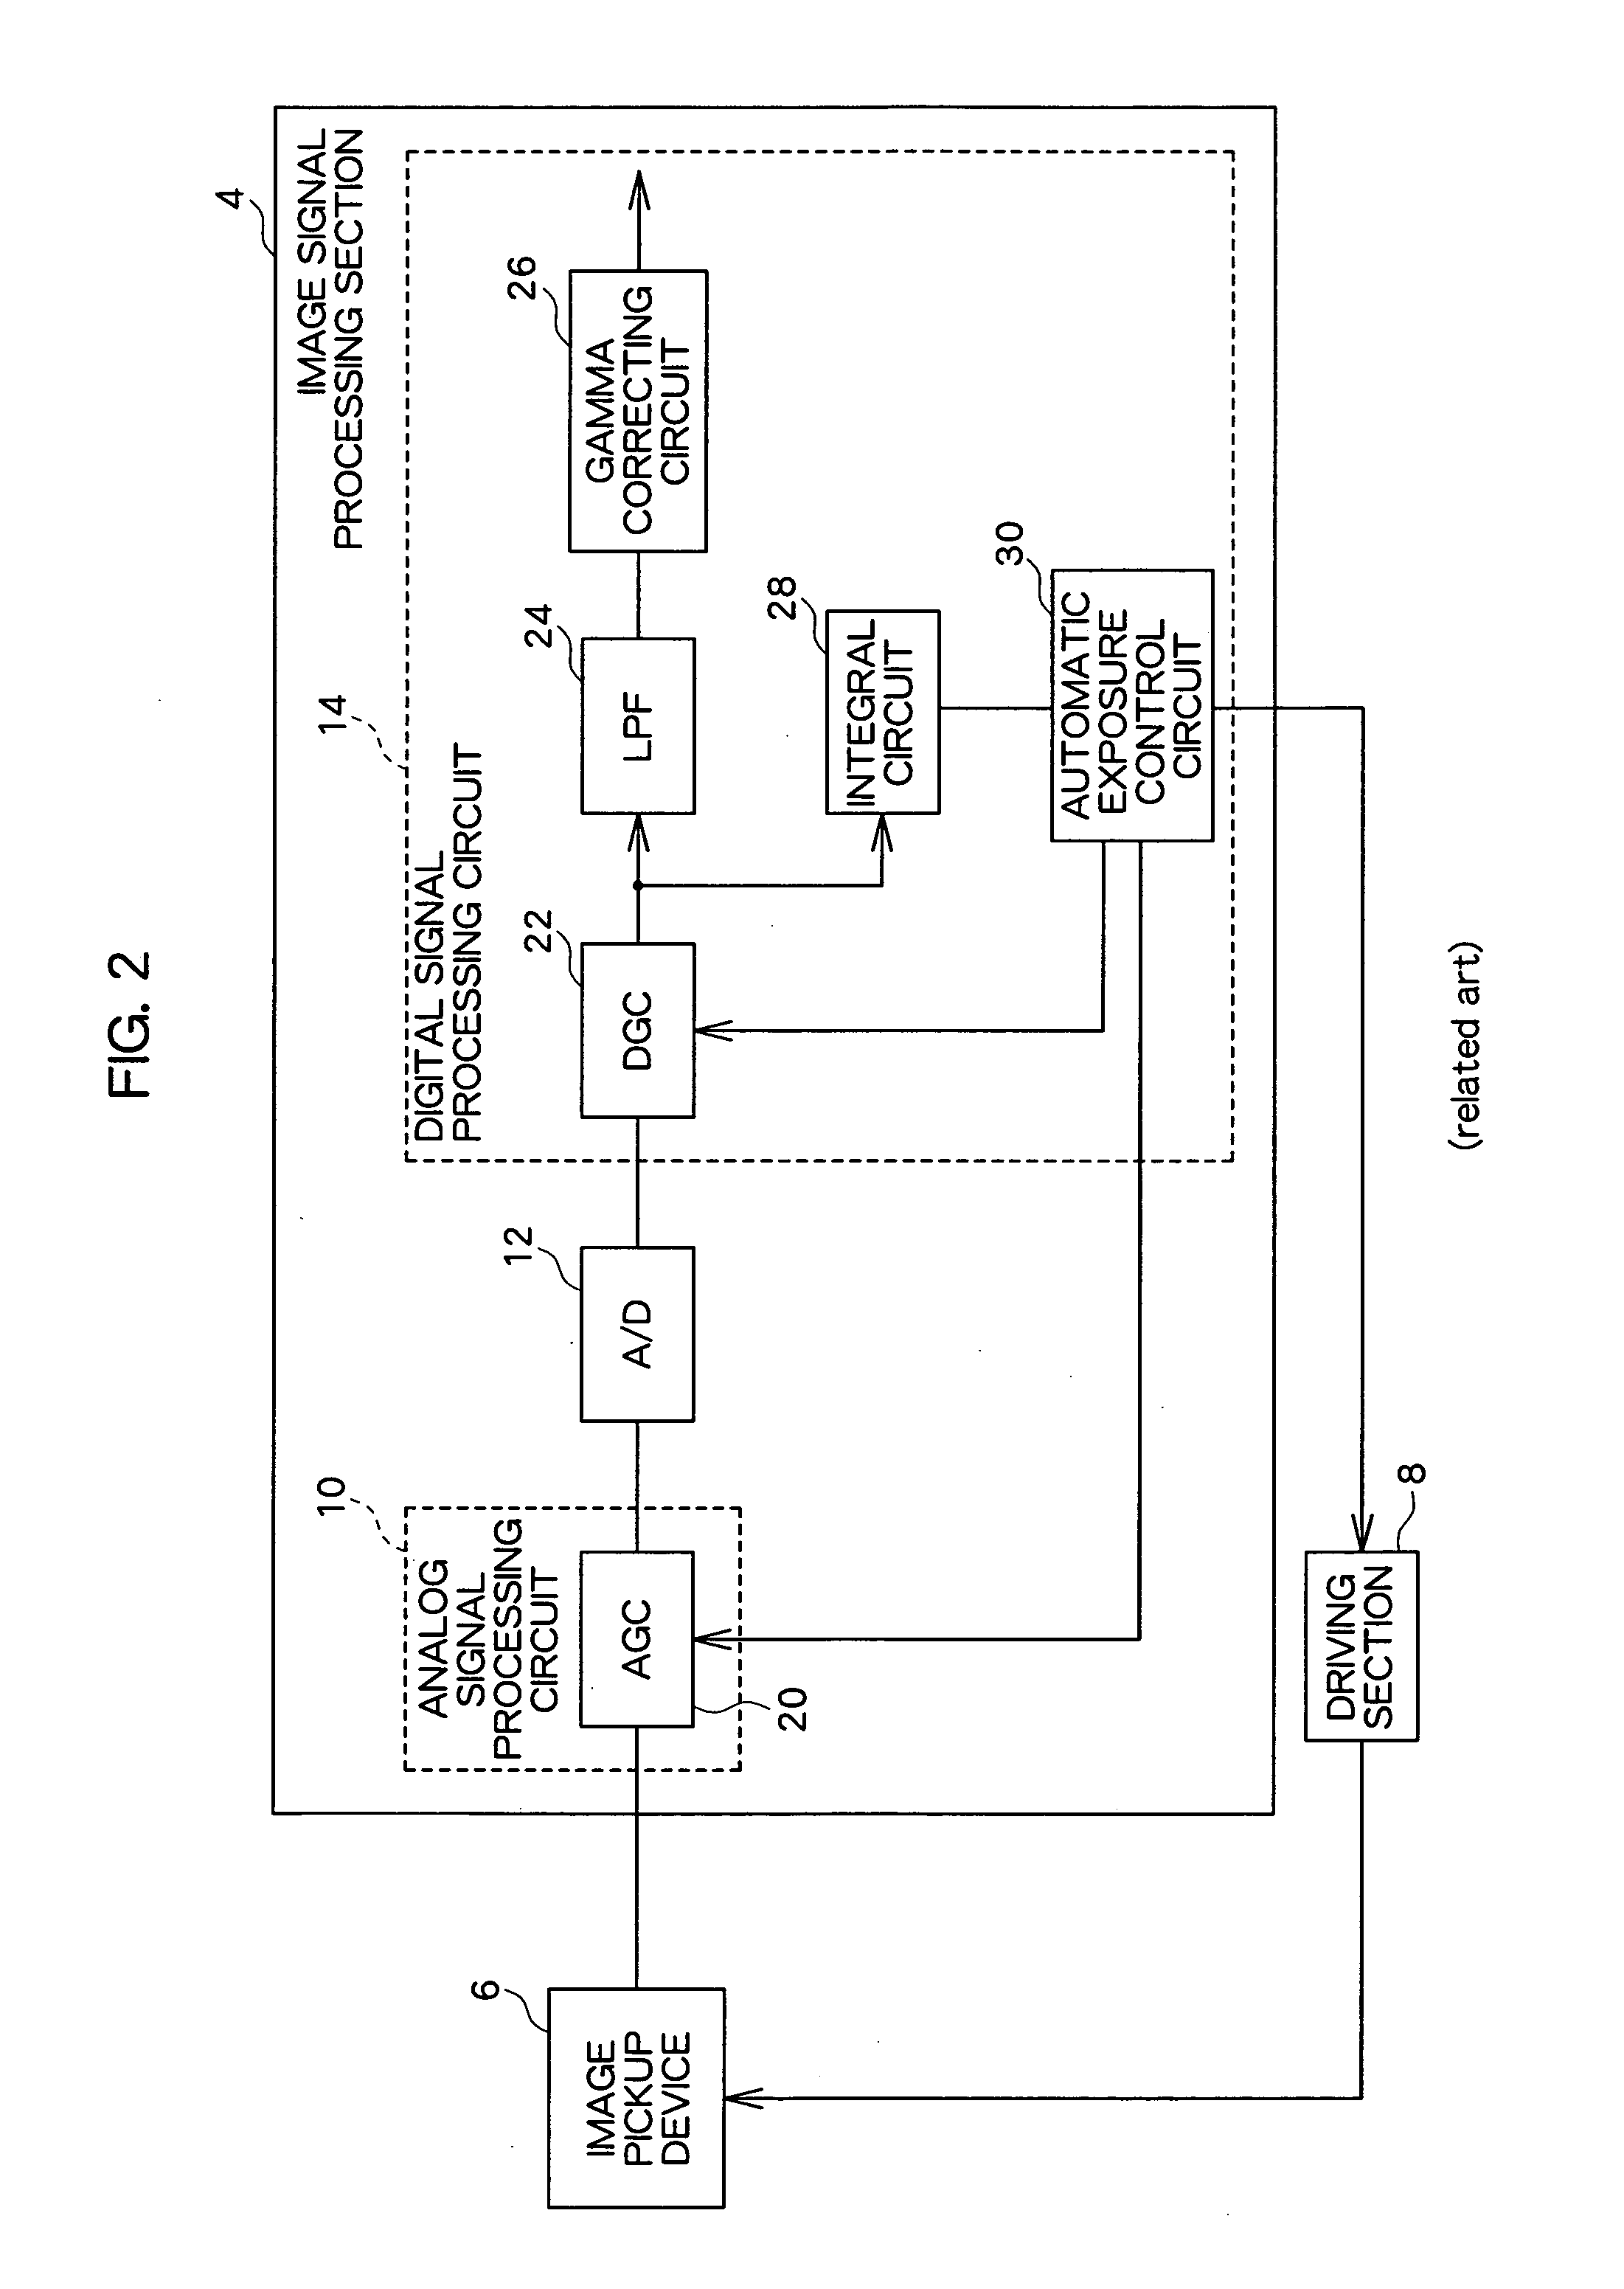 Image signal processor